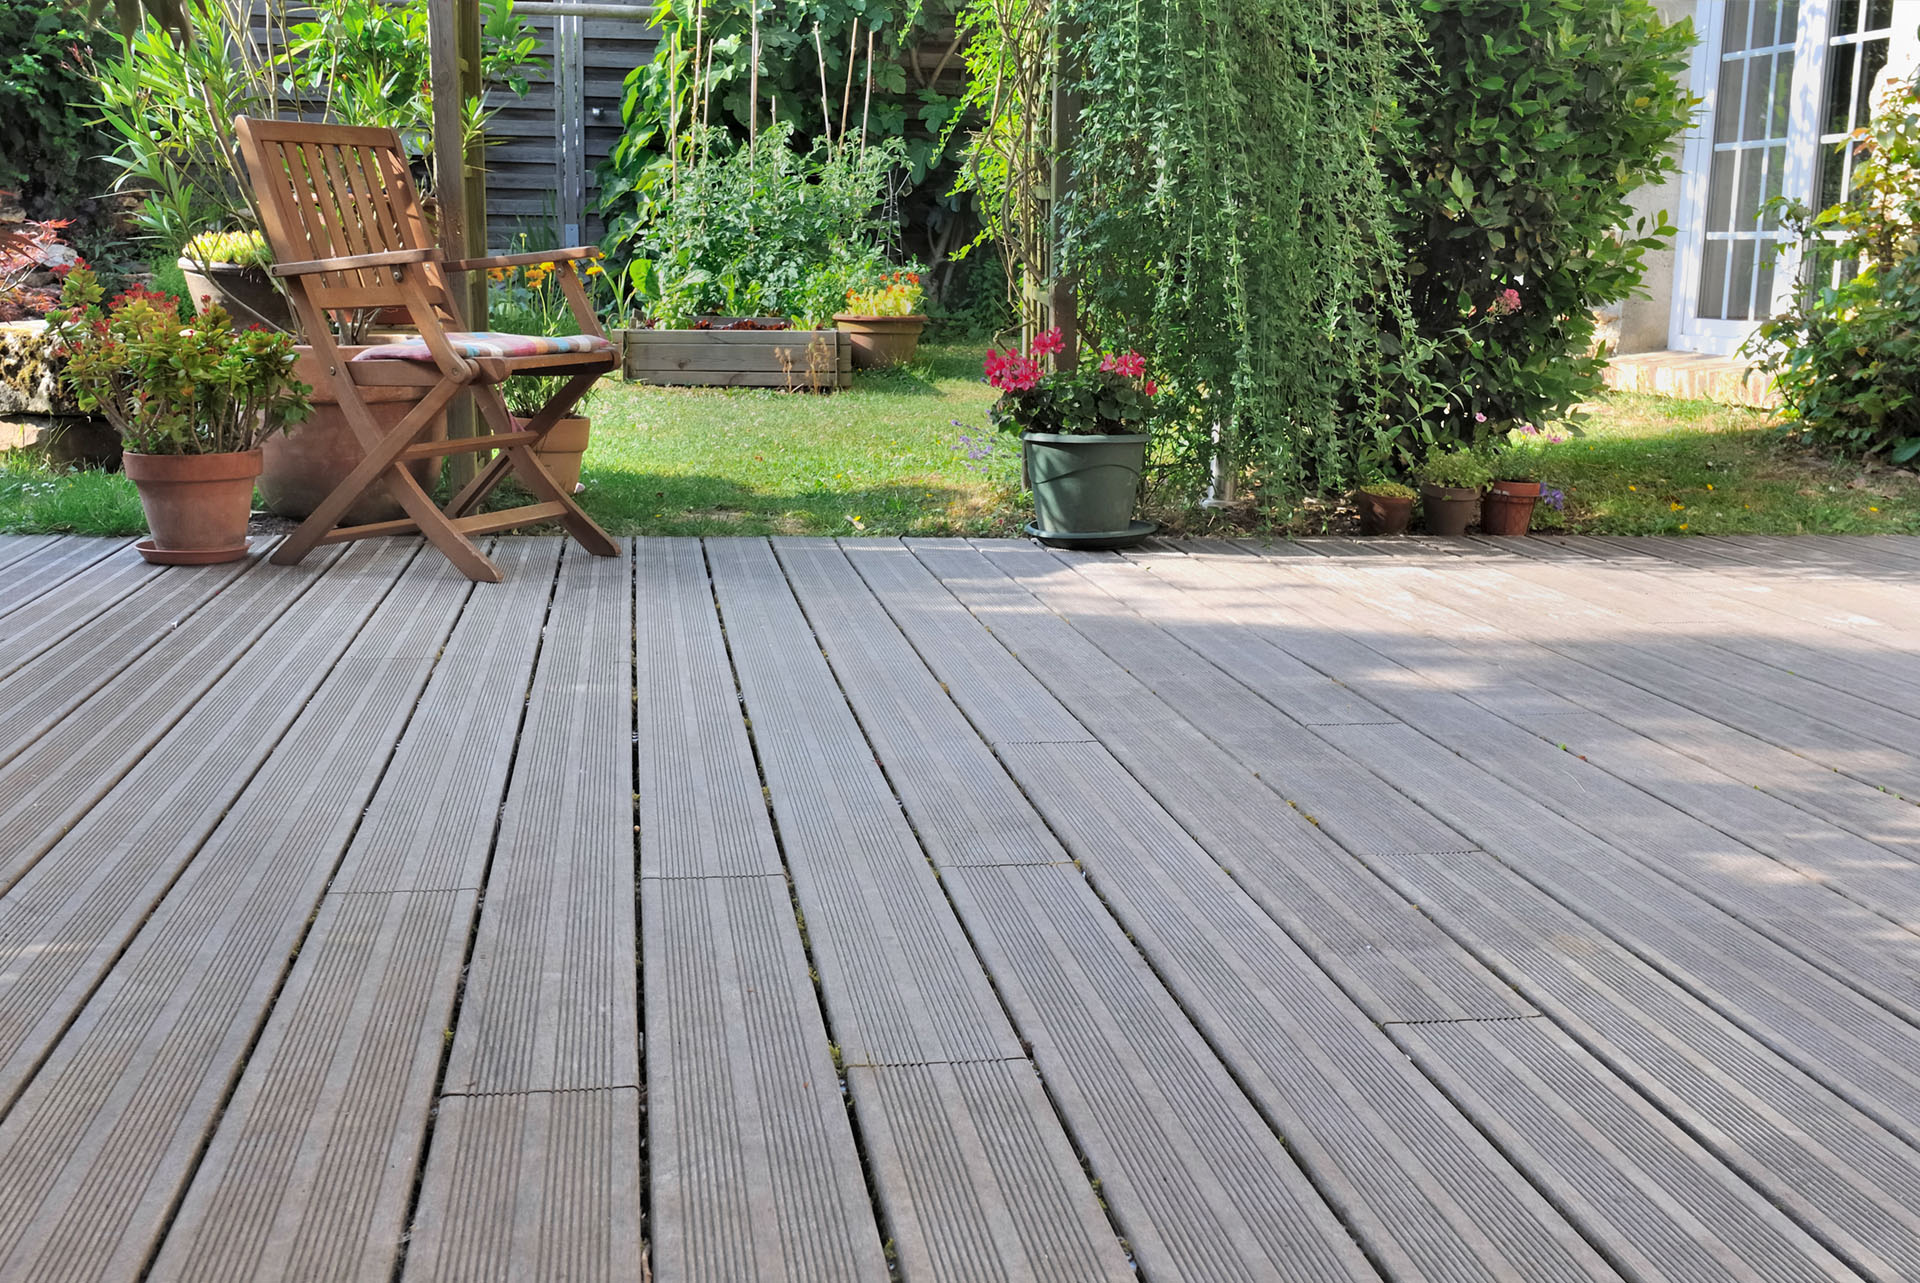 timber-decking-wooden-deck-boards-natural-grey-garden-patio